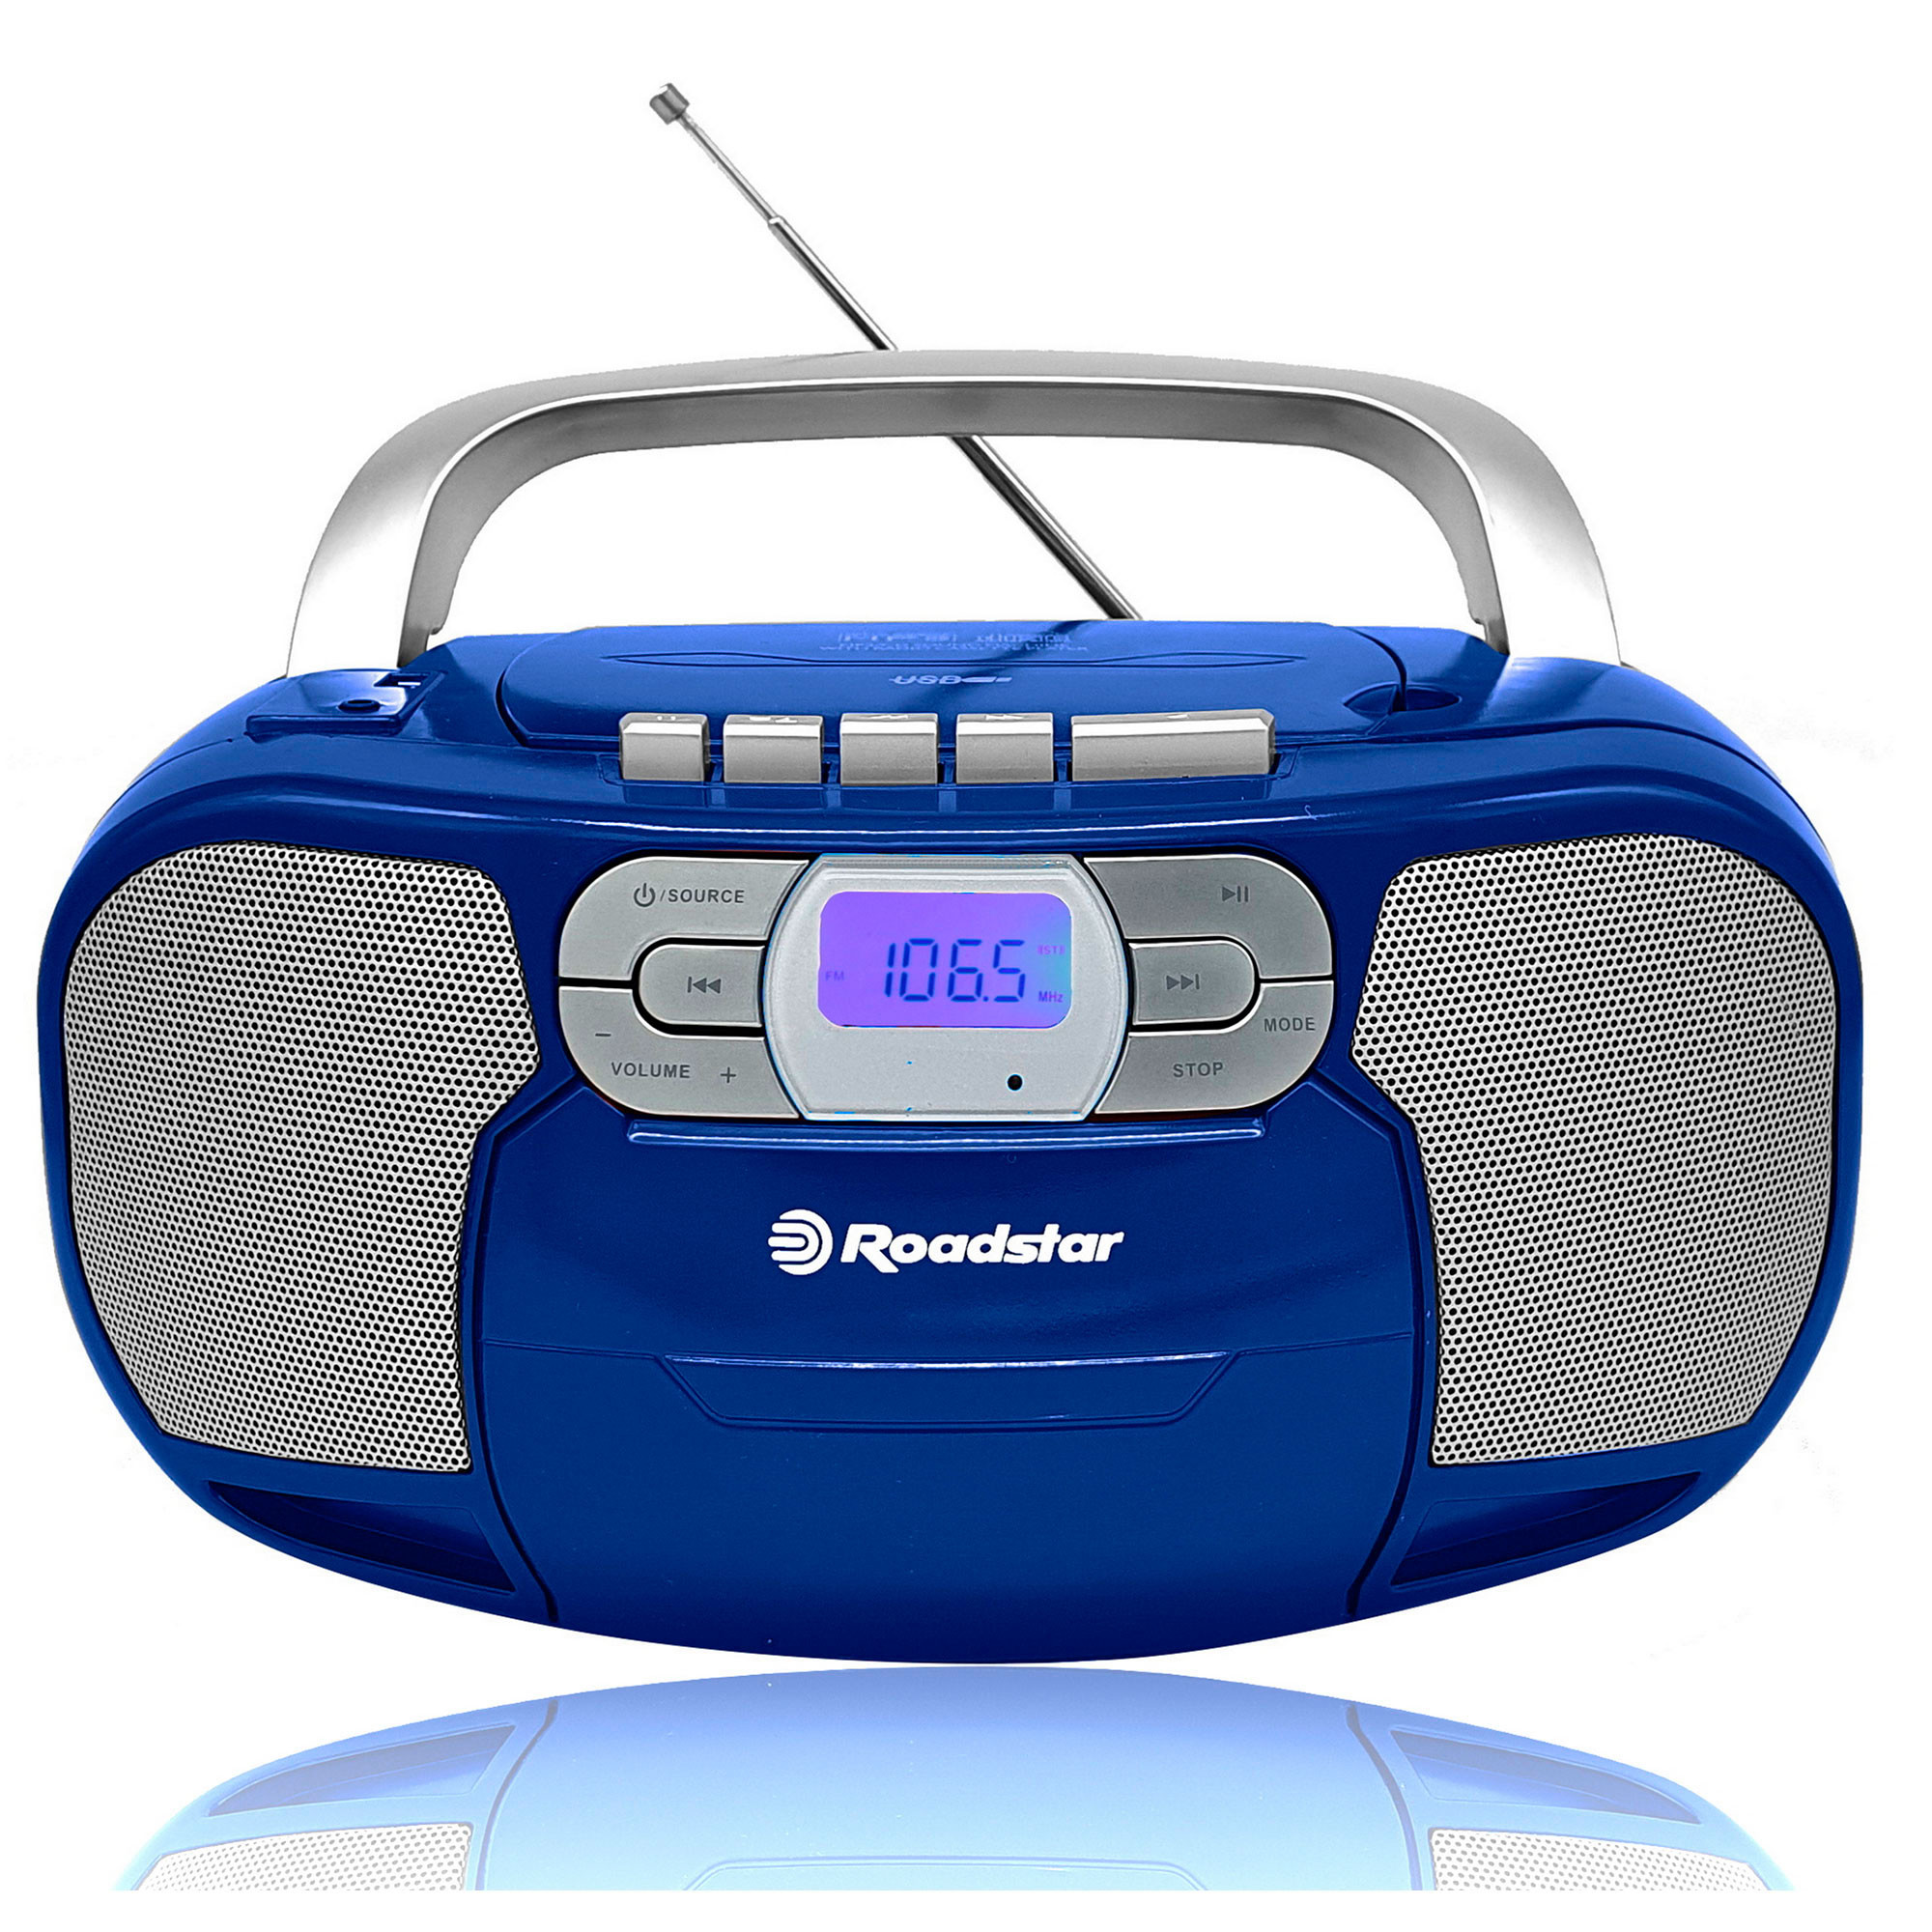 Roadstar Radio CD Portátil Cassette, Radio Digital Reproductor CD-MP3, USB,